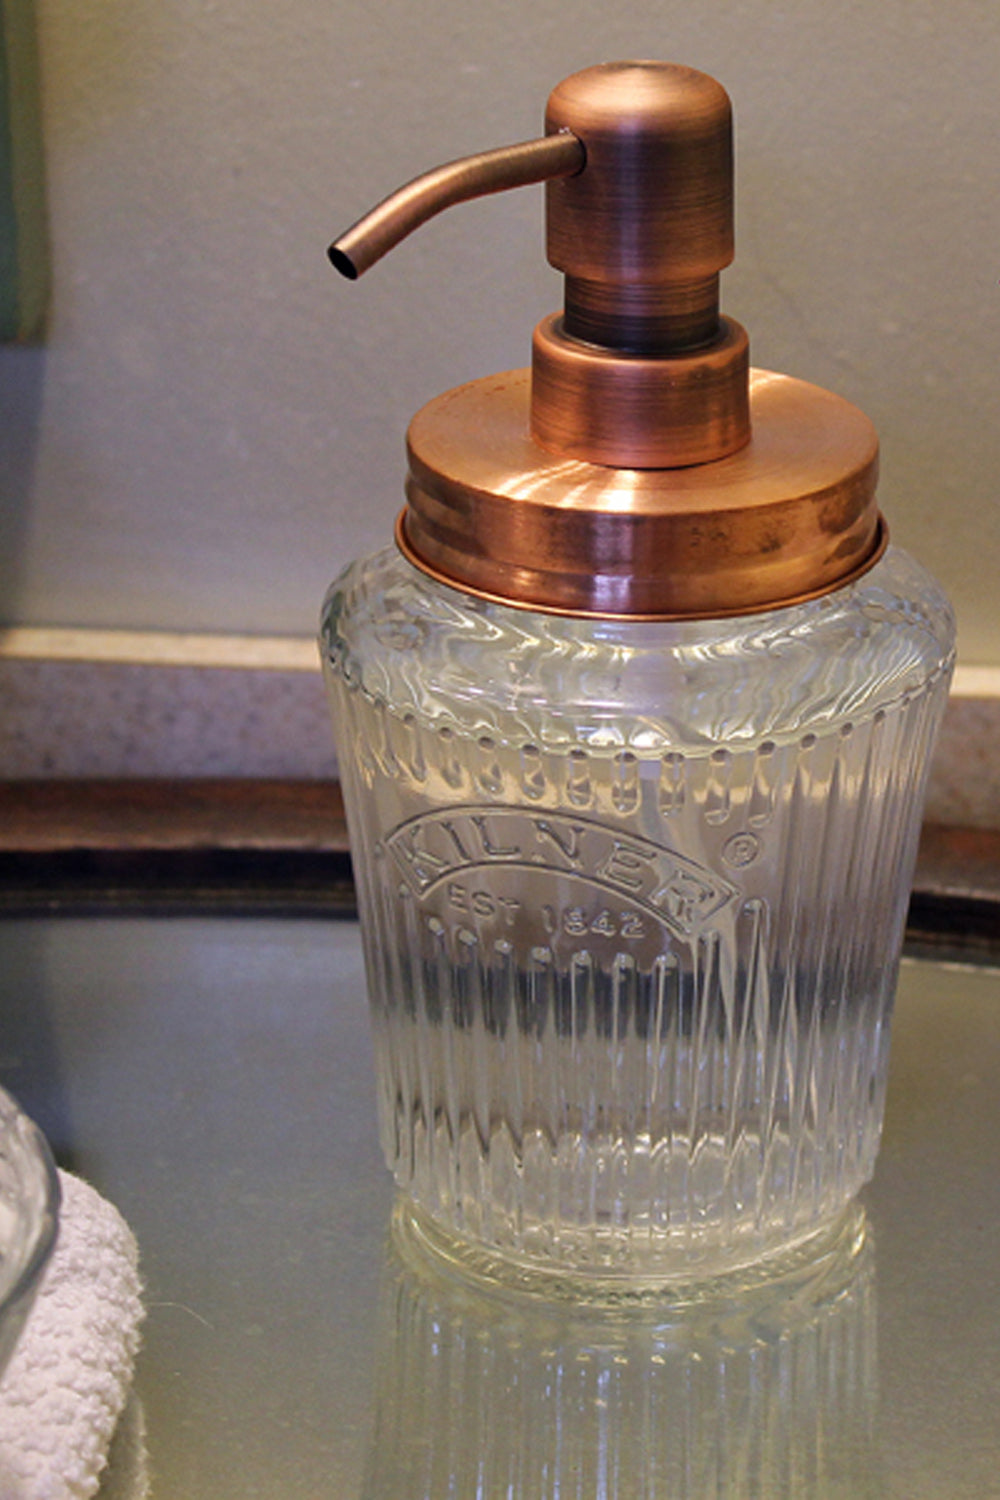 Copper Rust Proof Antique Kilner Jar Soap Dispenser-Soap, Foaming Soap Pump - Lizzy Lane Farm Apothecary